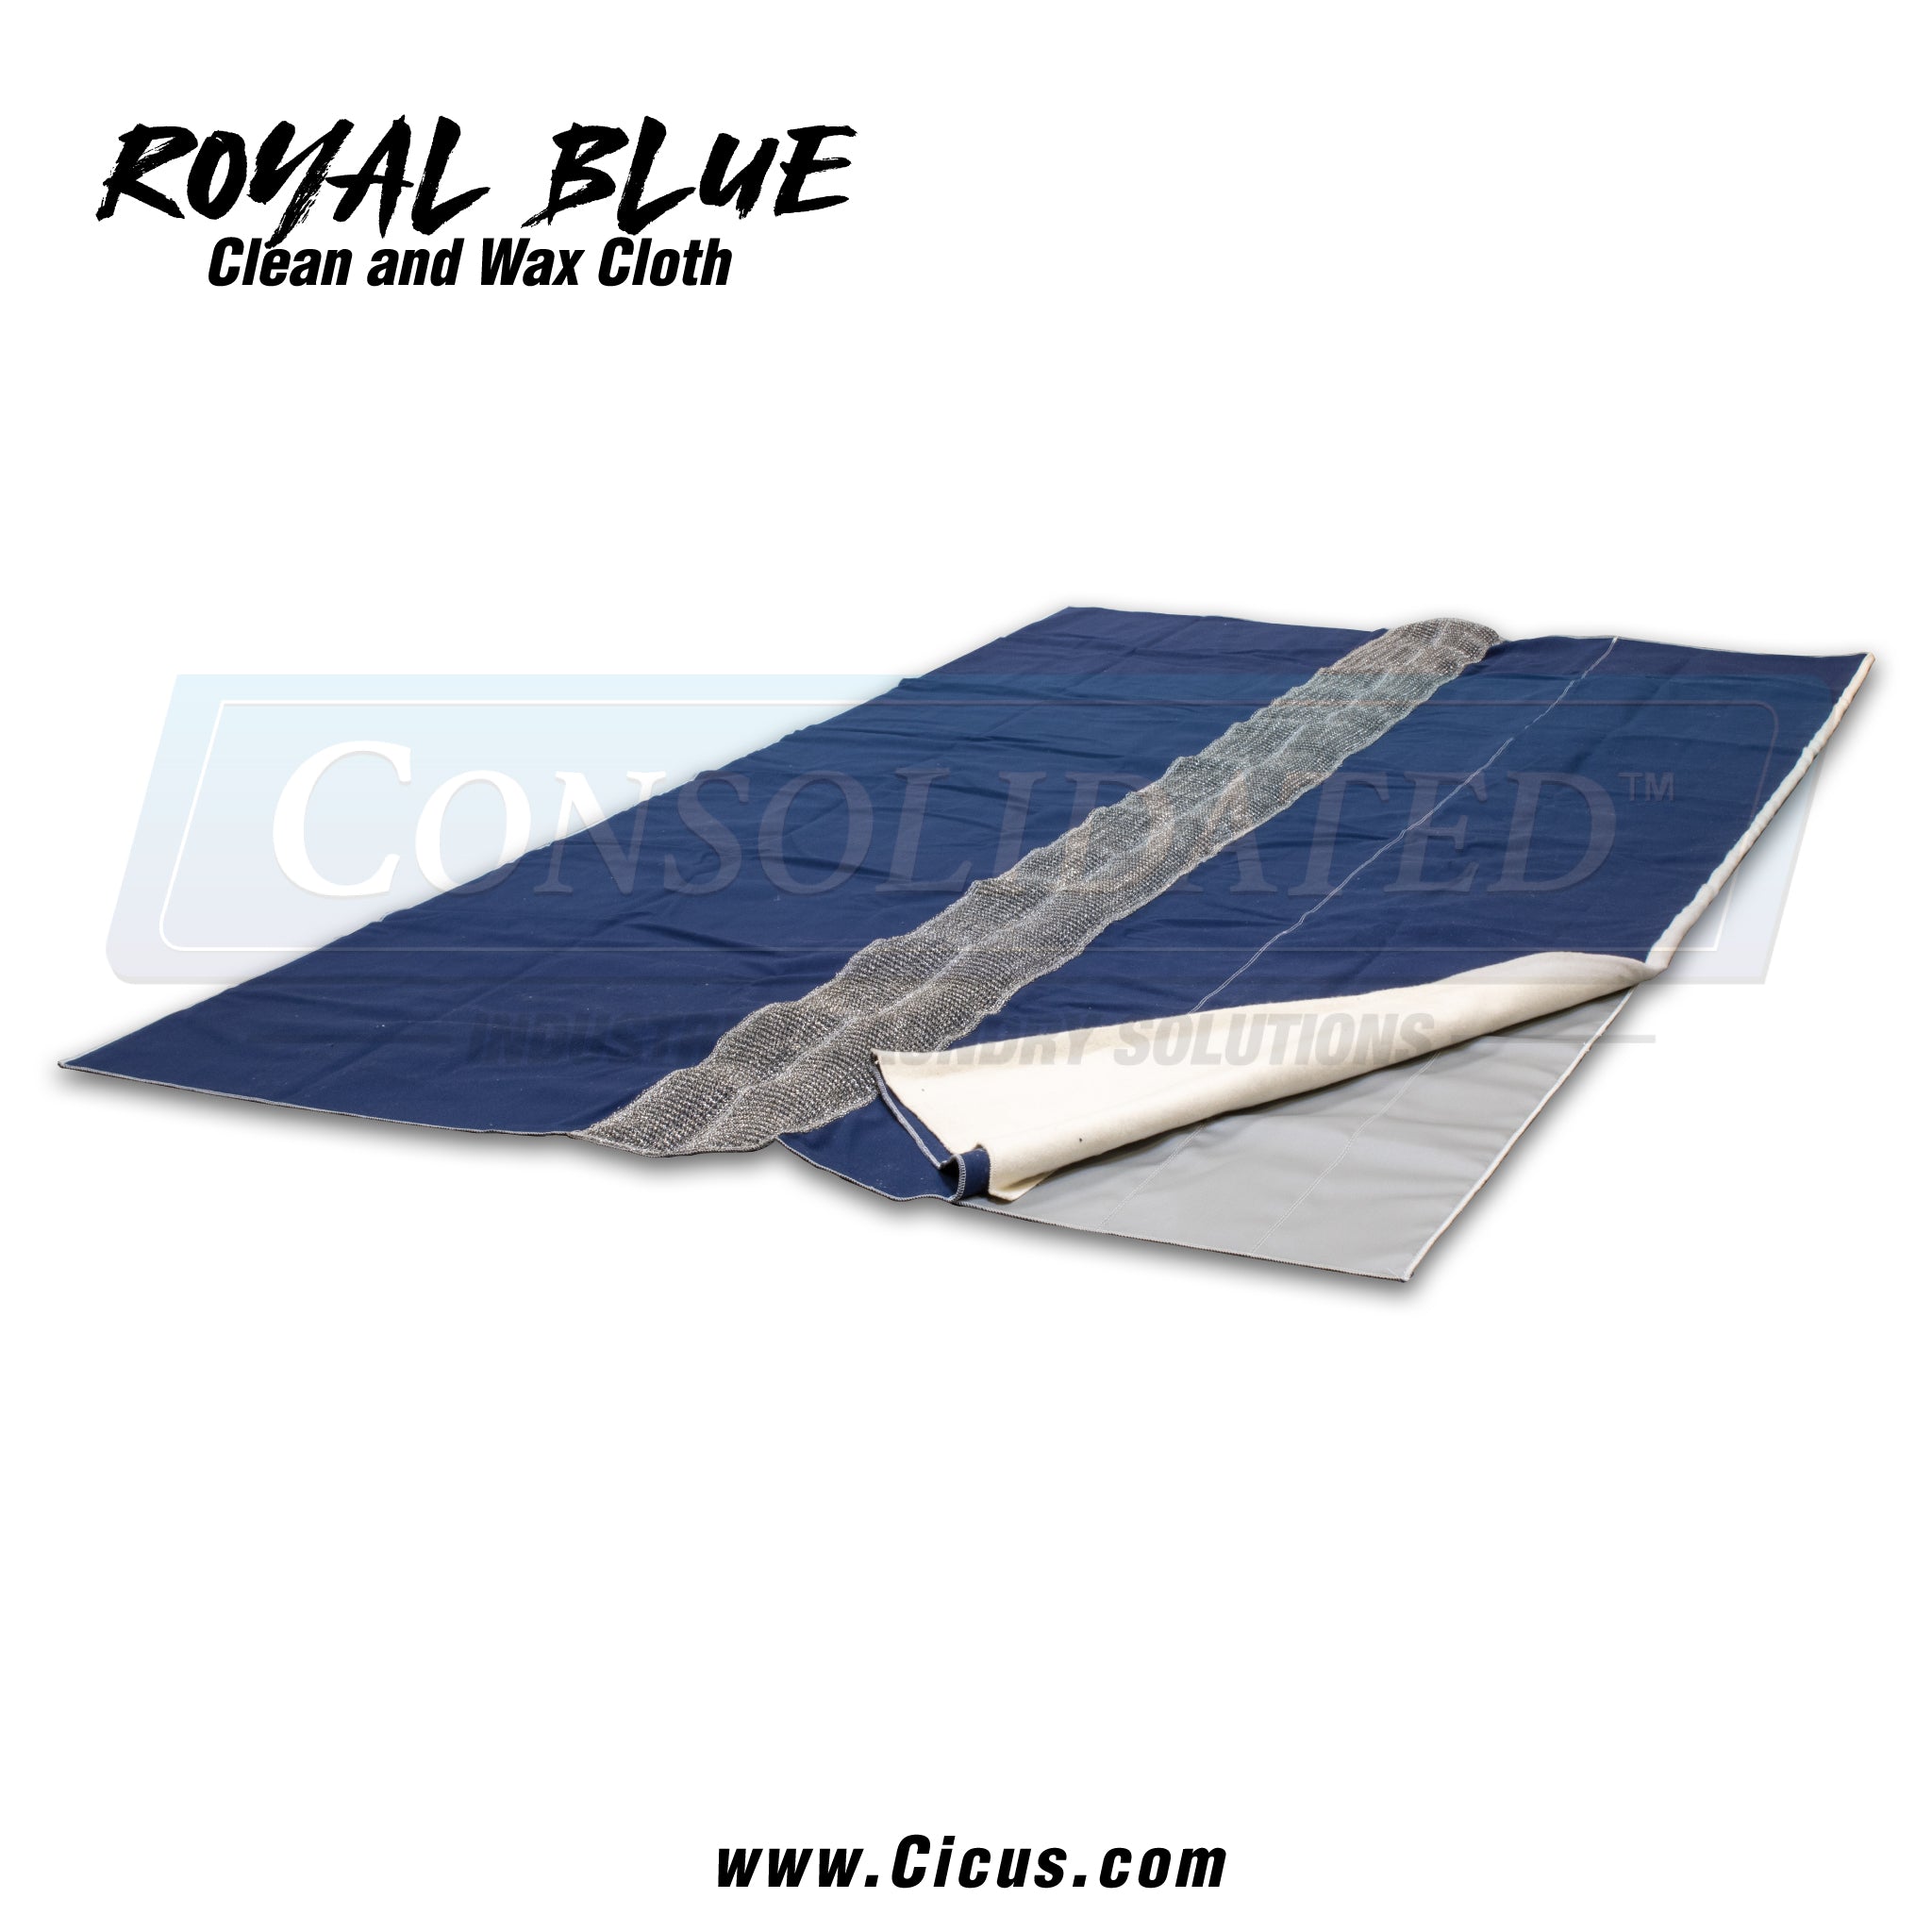 Flatwork Ironer Royal Blue Wax & Clean Cloth - Durable Mesh - Varies Sizes